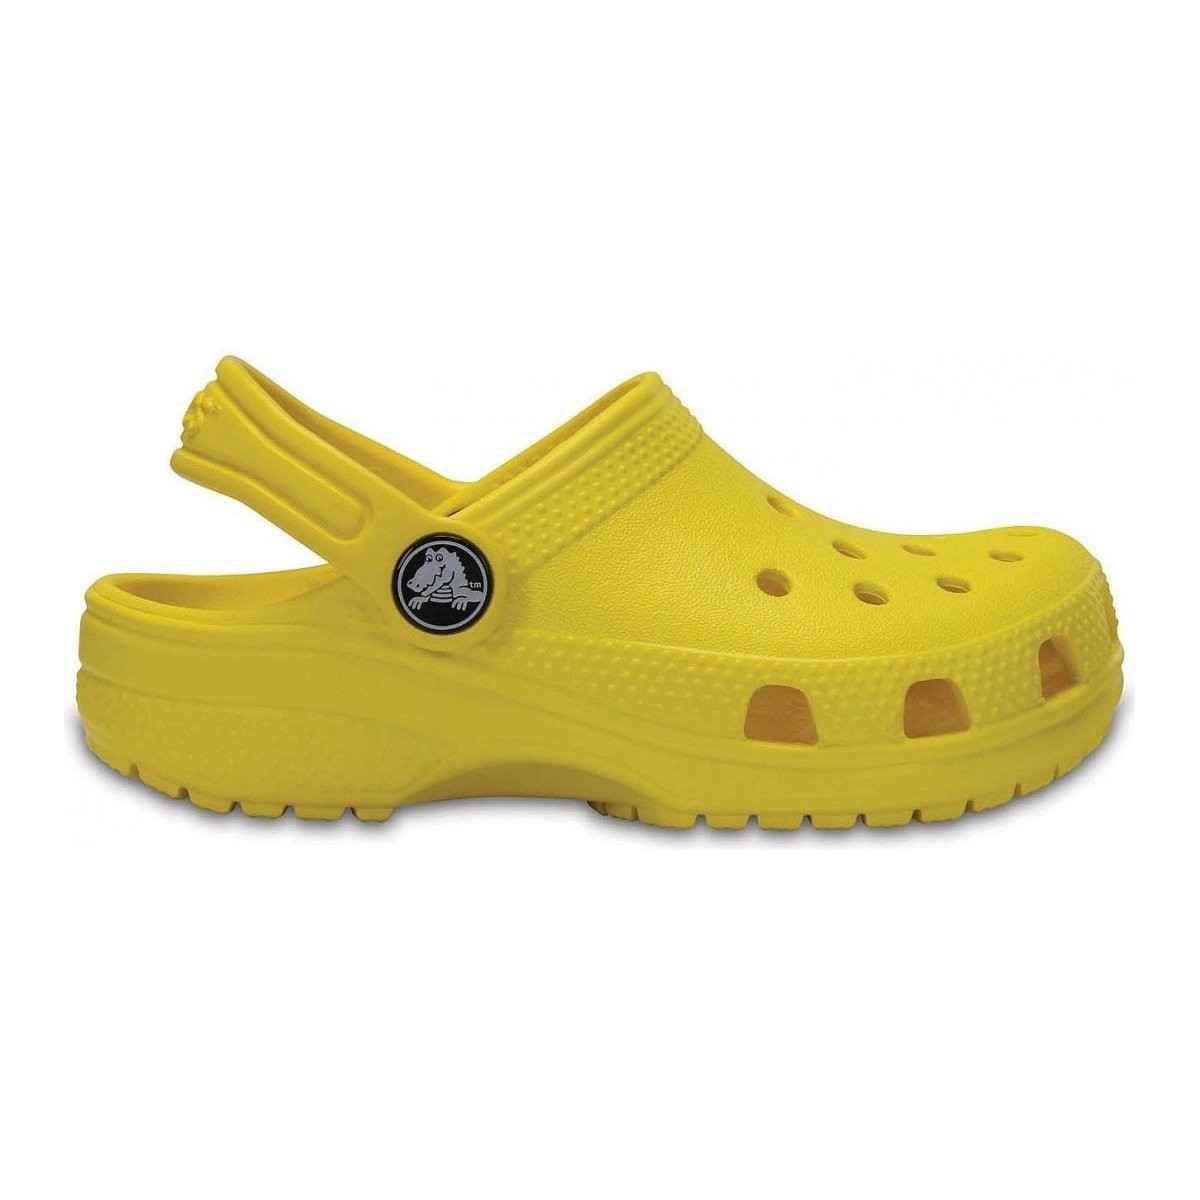 Zapatos Niños Zuecos (Mules) Crocs CR.204536-LEMO Lemon